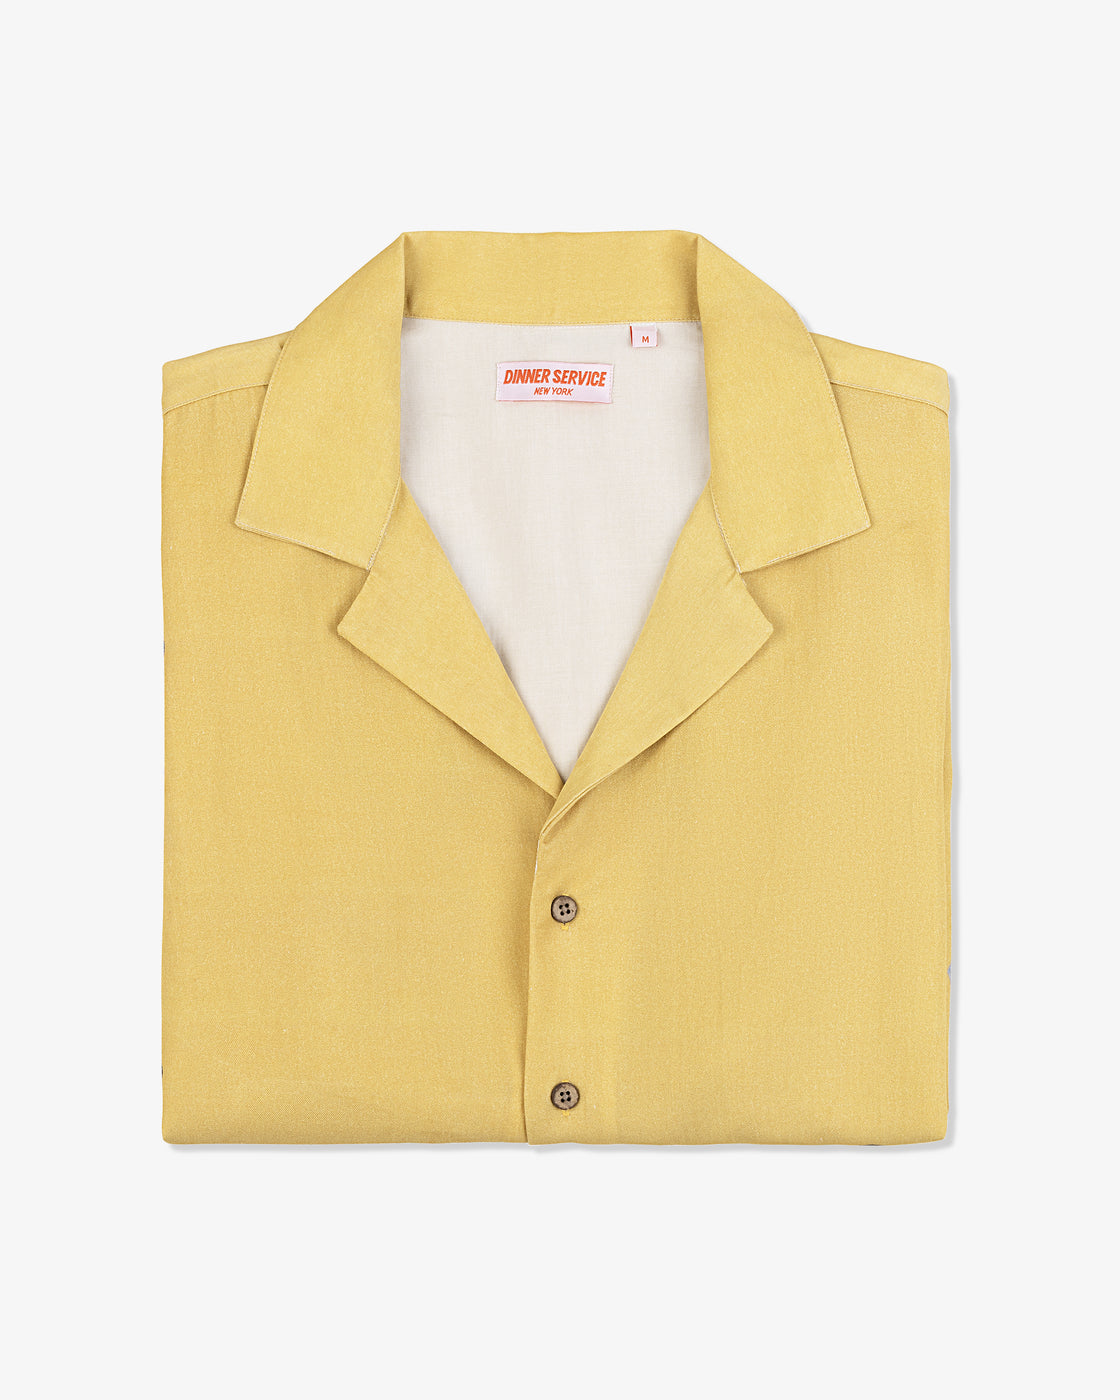 PROTEA x DSNY Bowling Shirt - Yellow